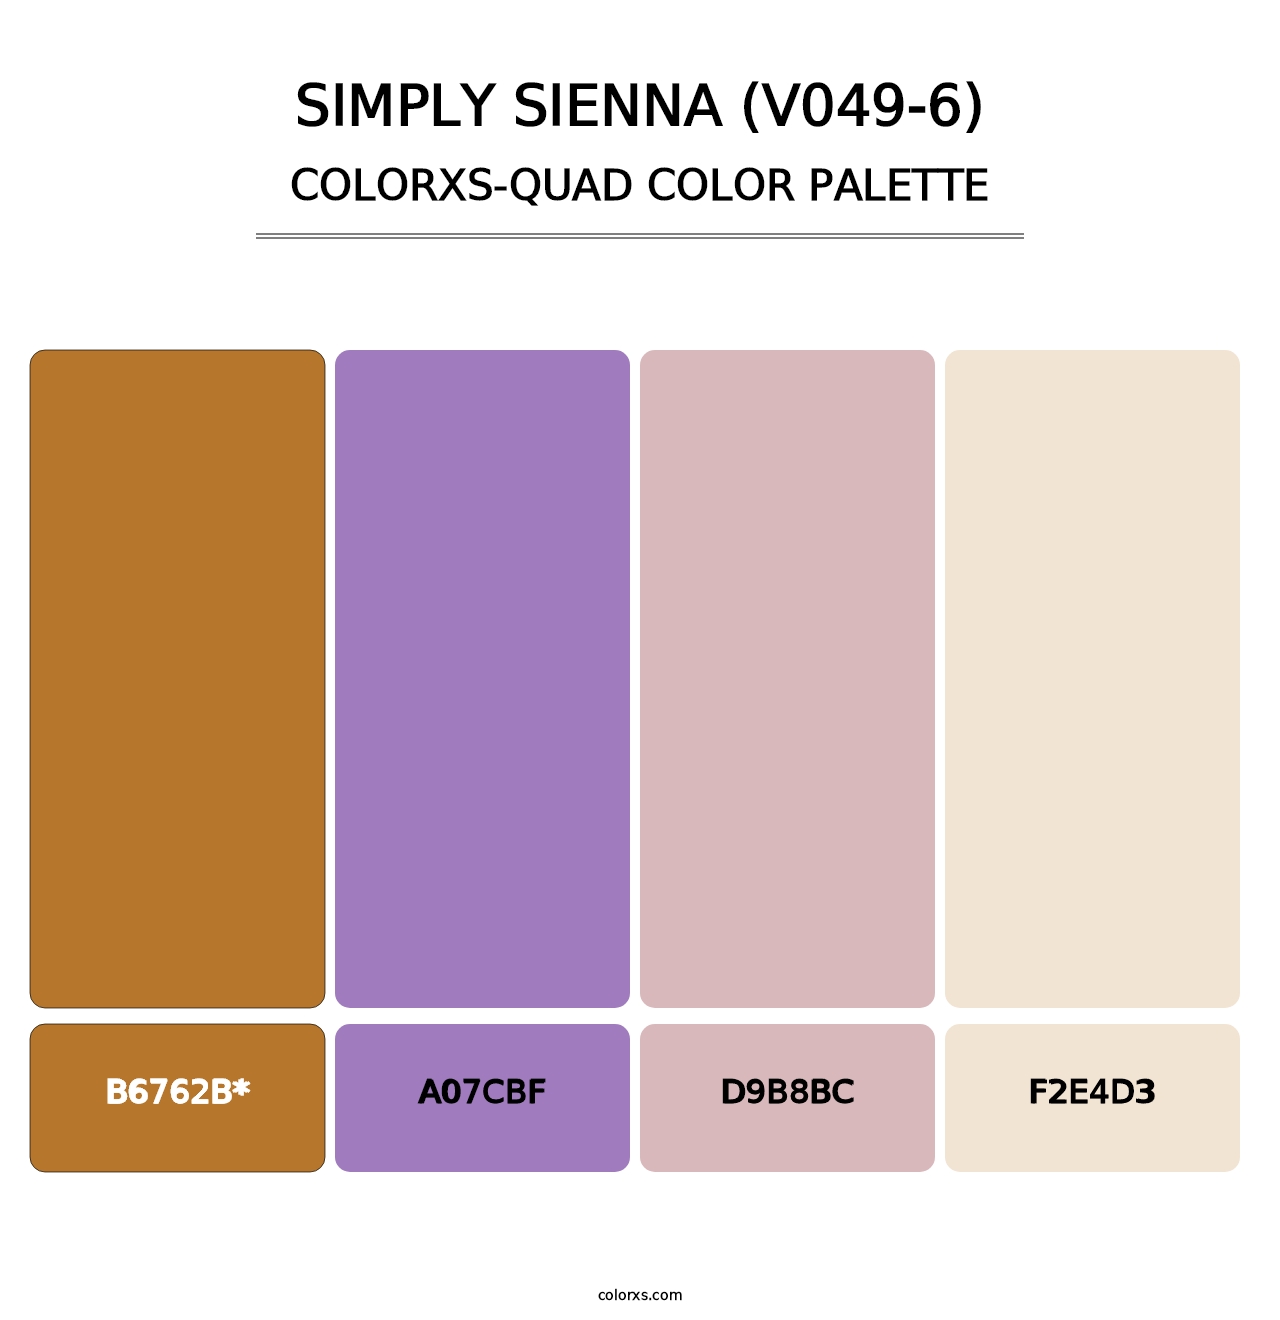 Simply Sienna (V049-6) - Colorxs Quad Palette